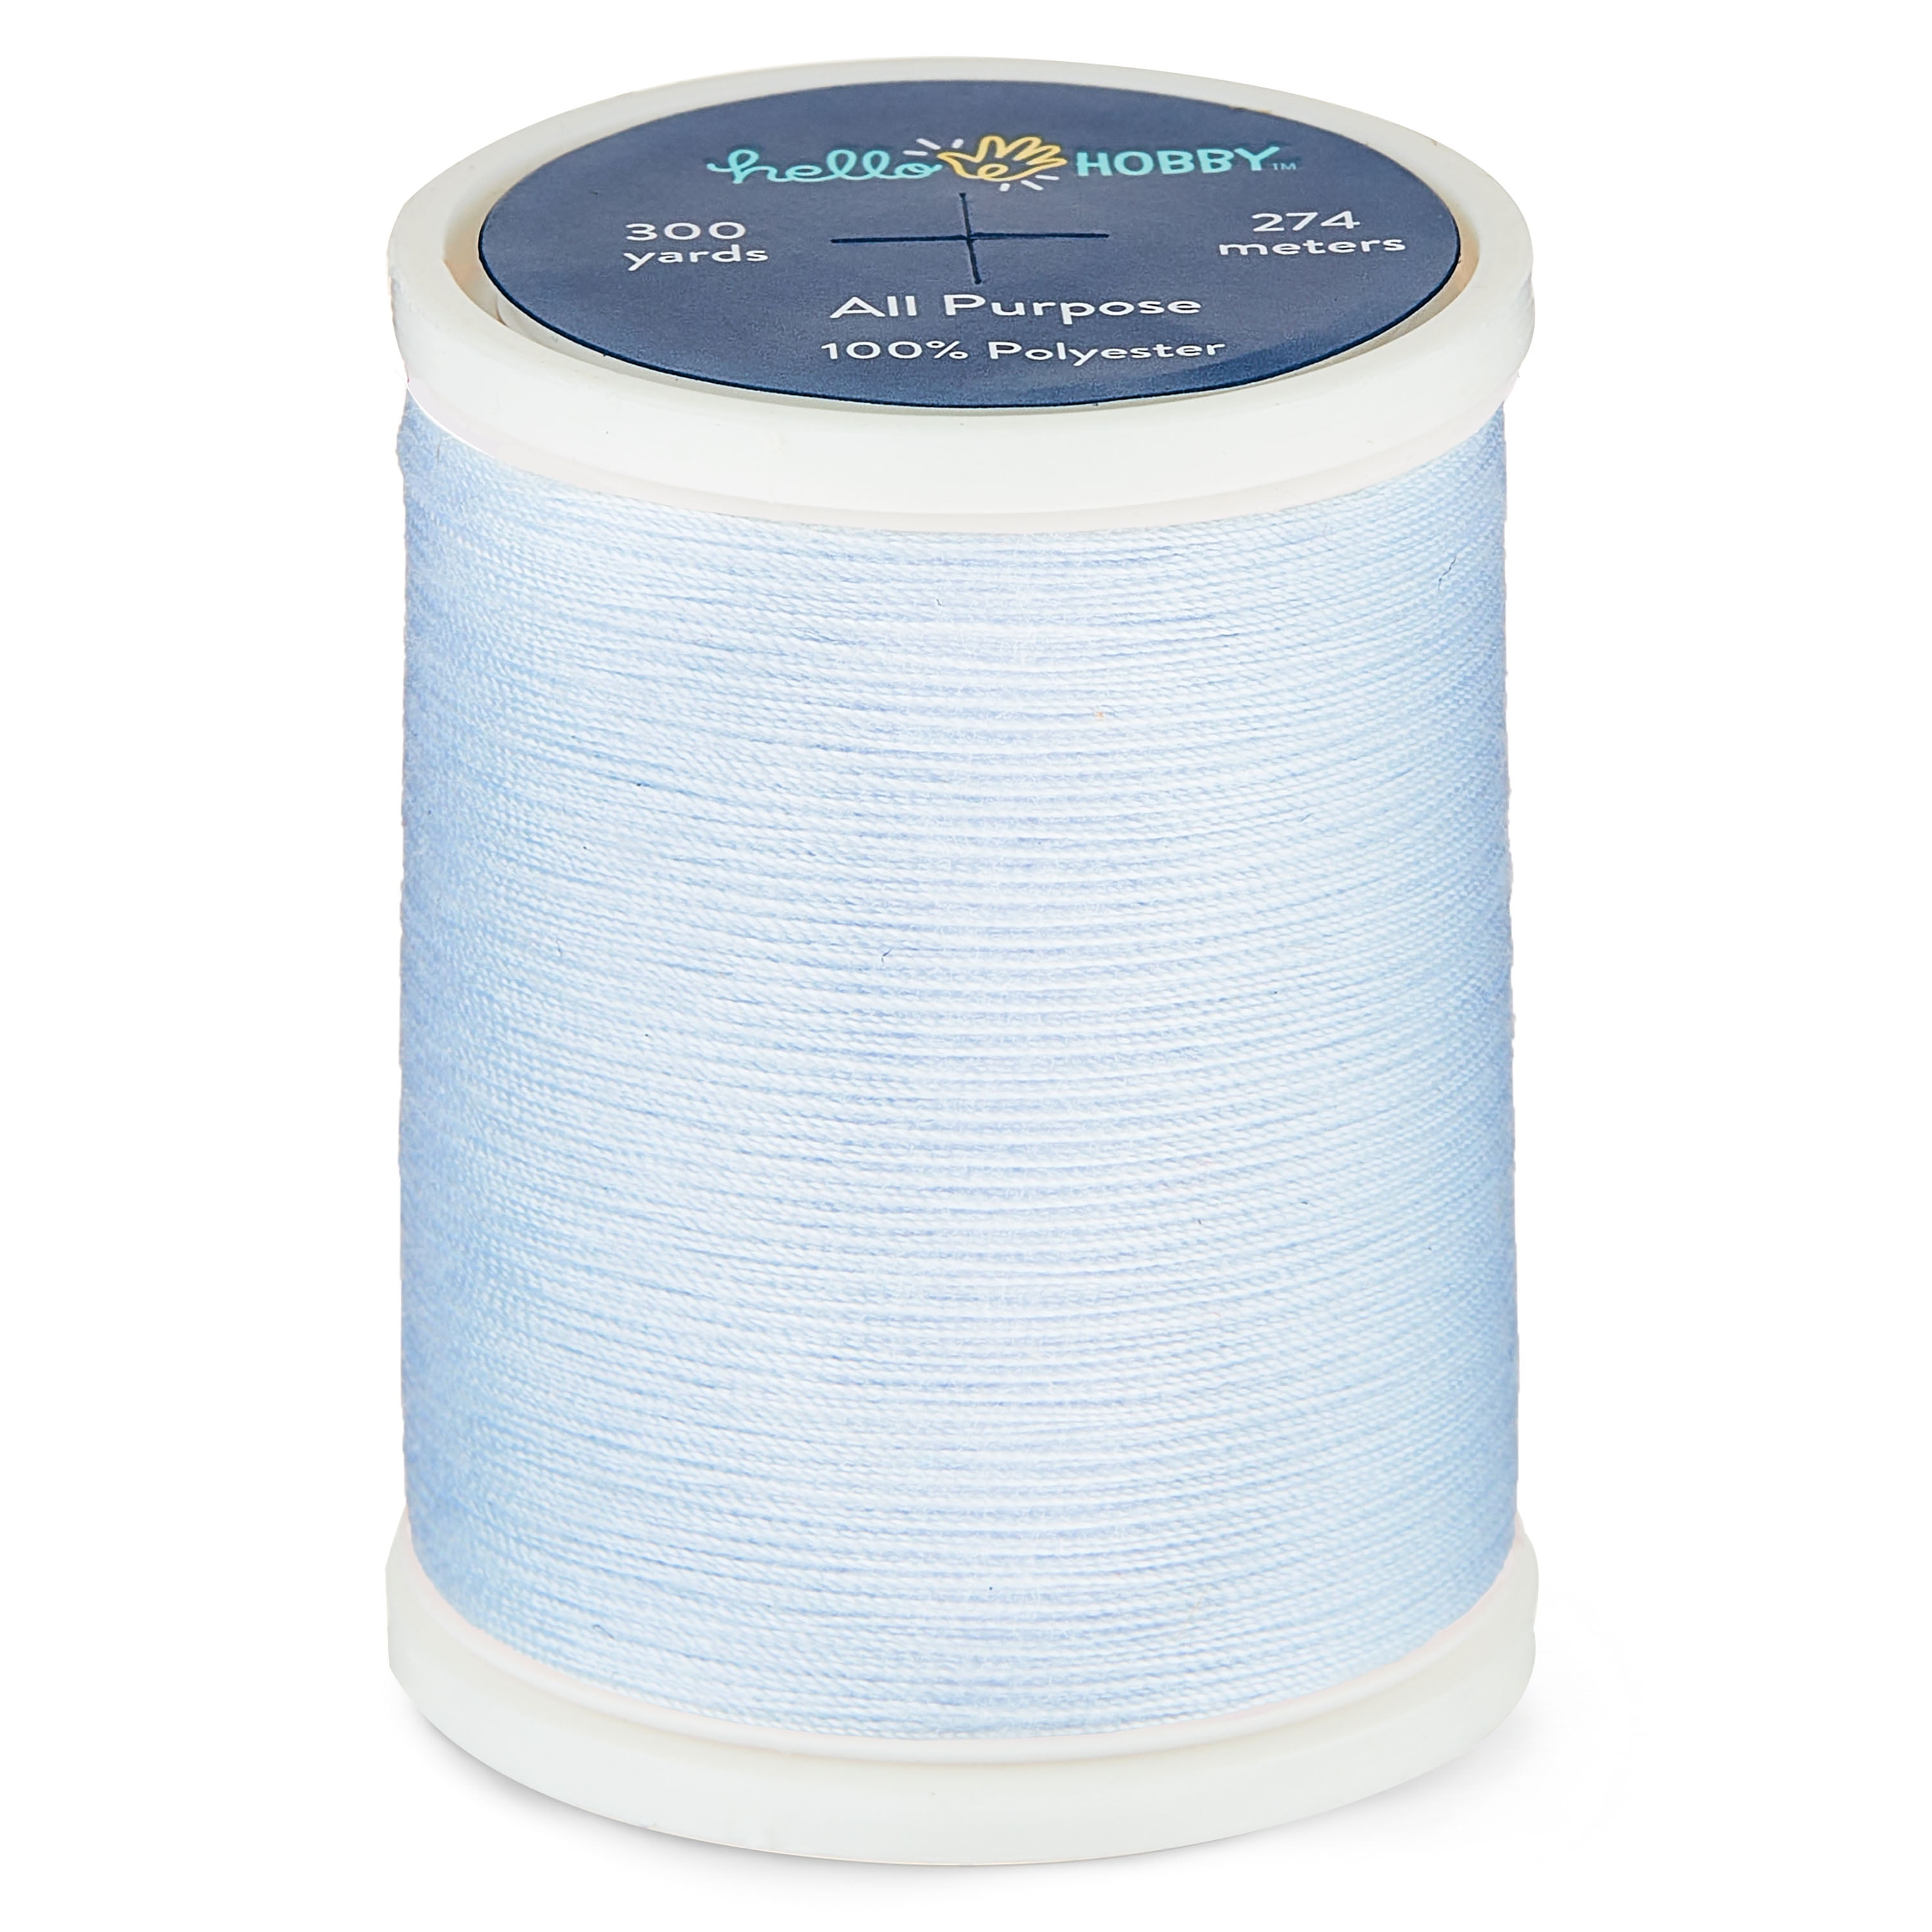 Hello Hobby Light Blue 100% Polyester All Purpose Thread, 300 Yards